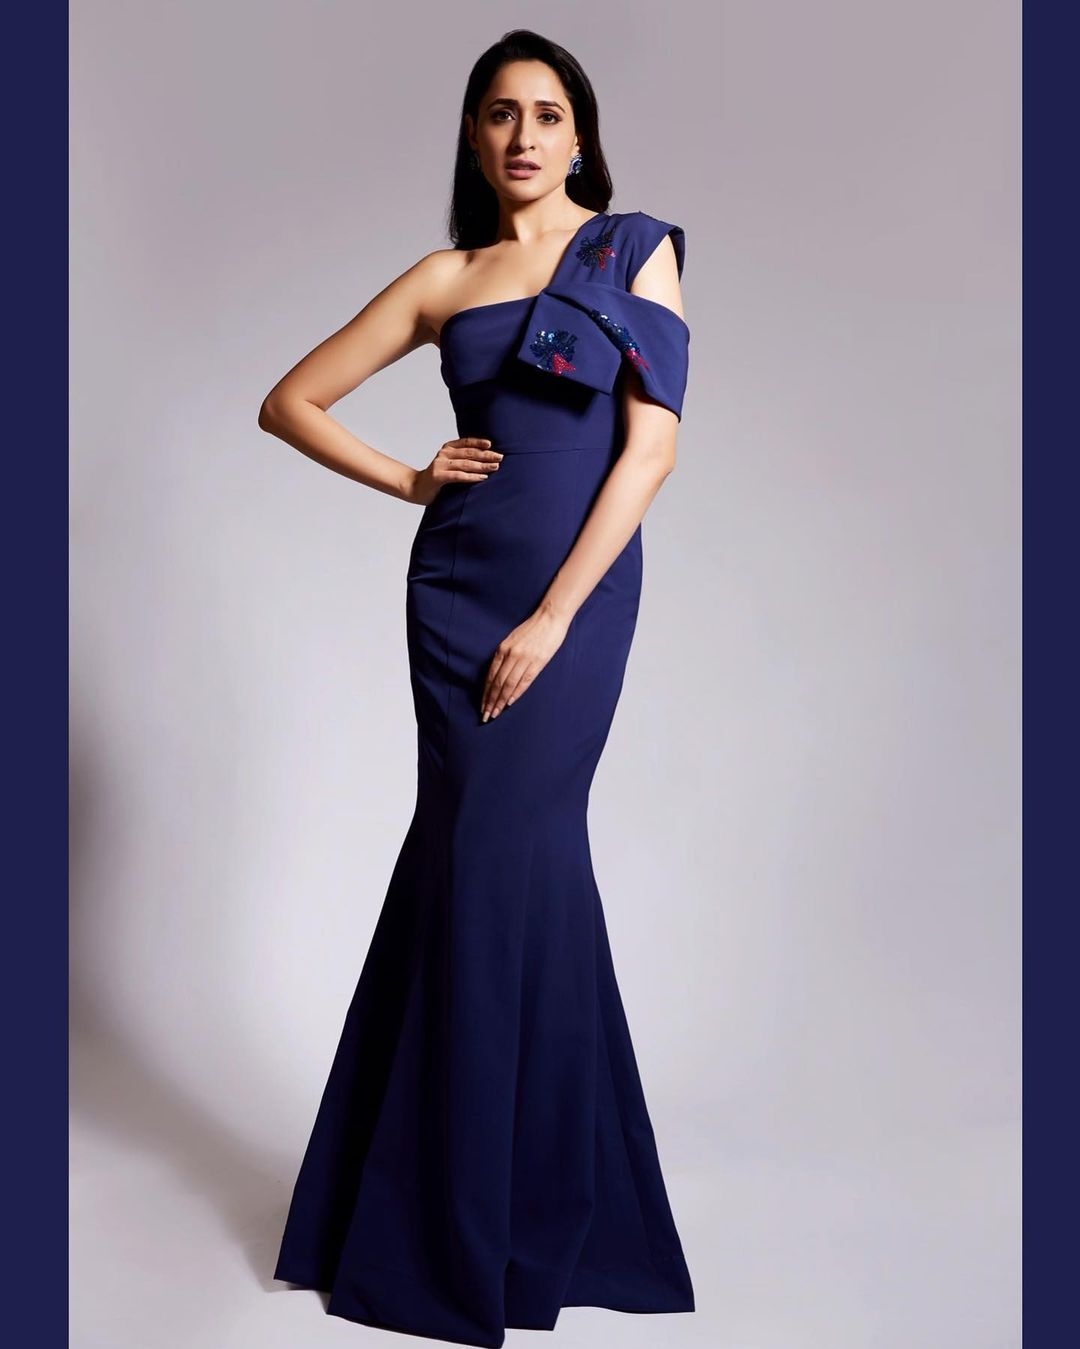 Pragya Jaiswal New Clicks In Blue Dress